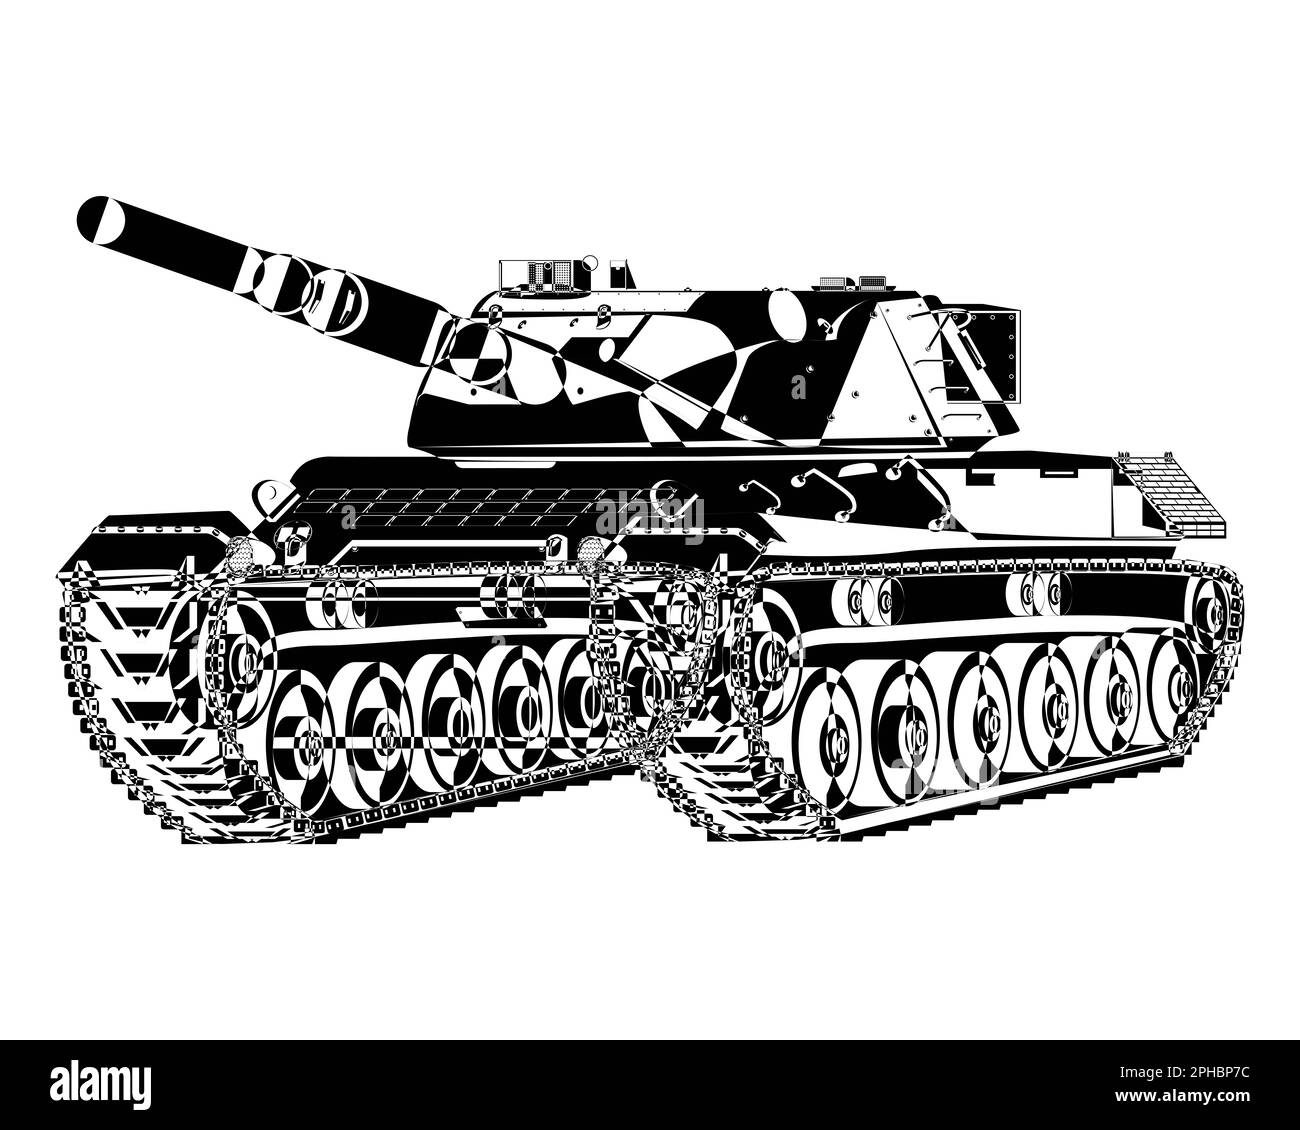 German Leopard I main battle tank in line art style. Military vehicle. Illustration isolated on white background. Stock Photo